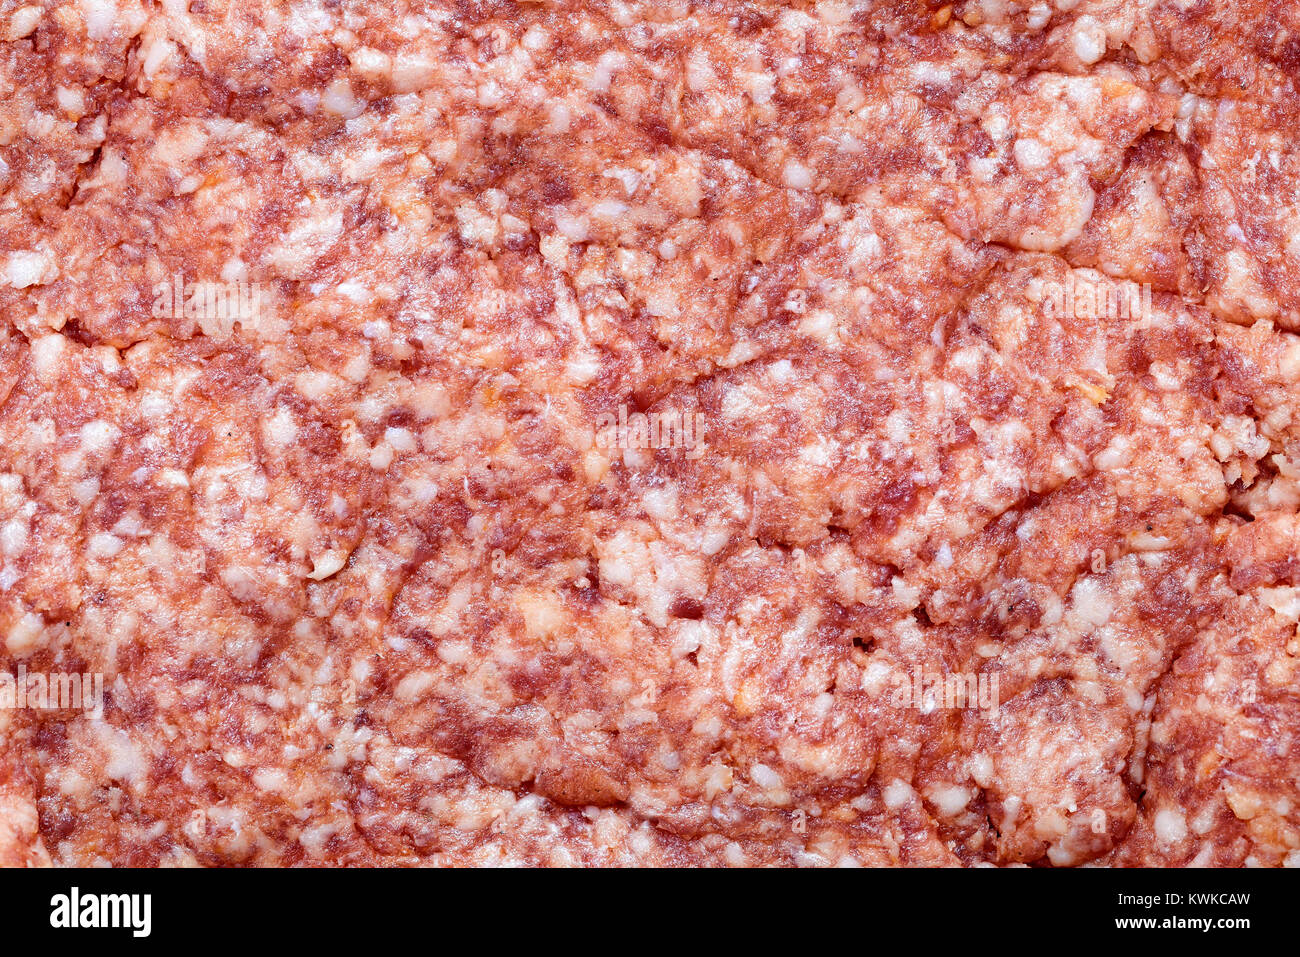 Red meat, WHO classifies sausage as cancer-causing, Rotes Fleisch, WHO stuft Wurst als krebserregend ein Stock Photo